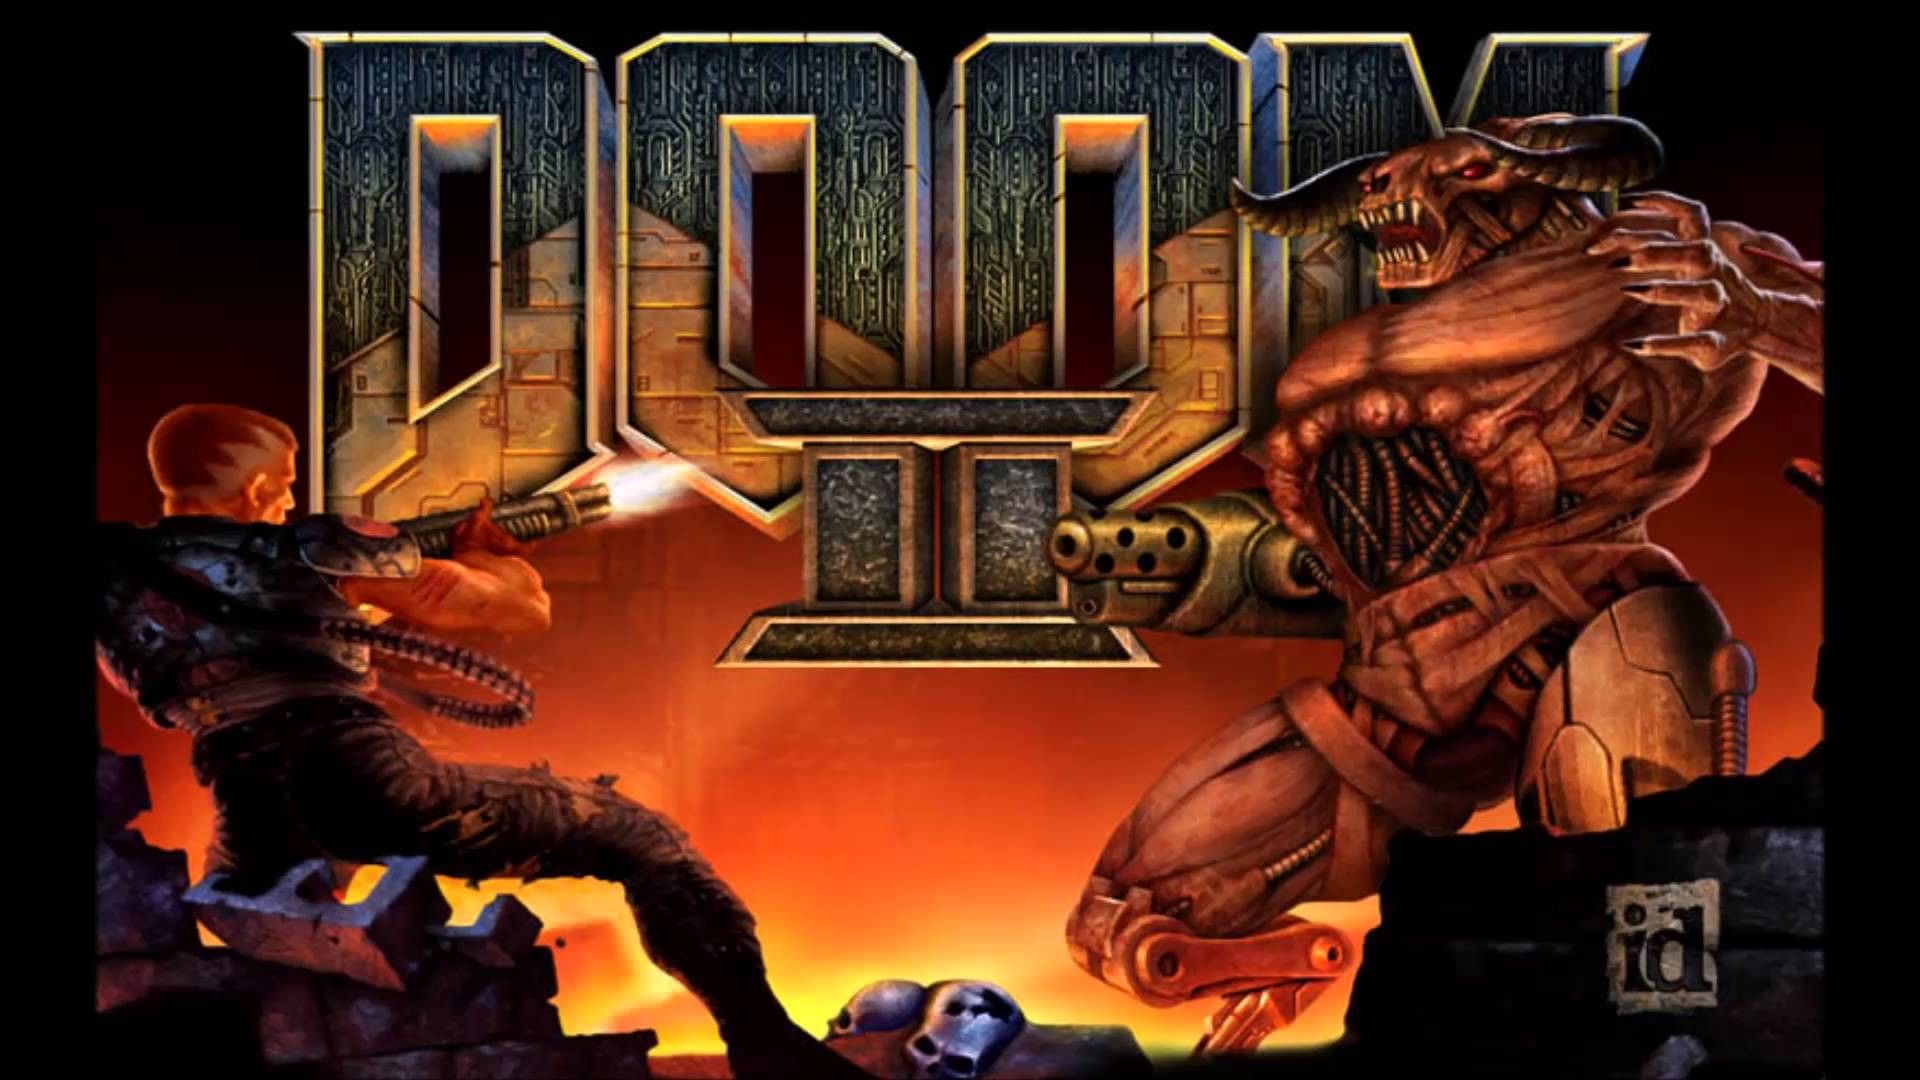 Doom 2 Wallpaper background picturepavbca.com